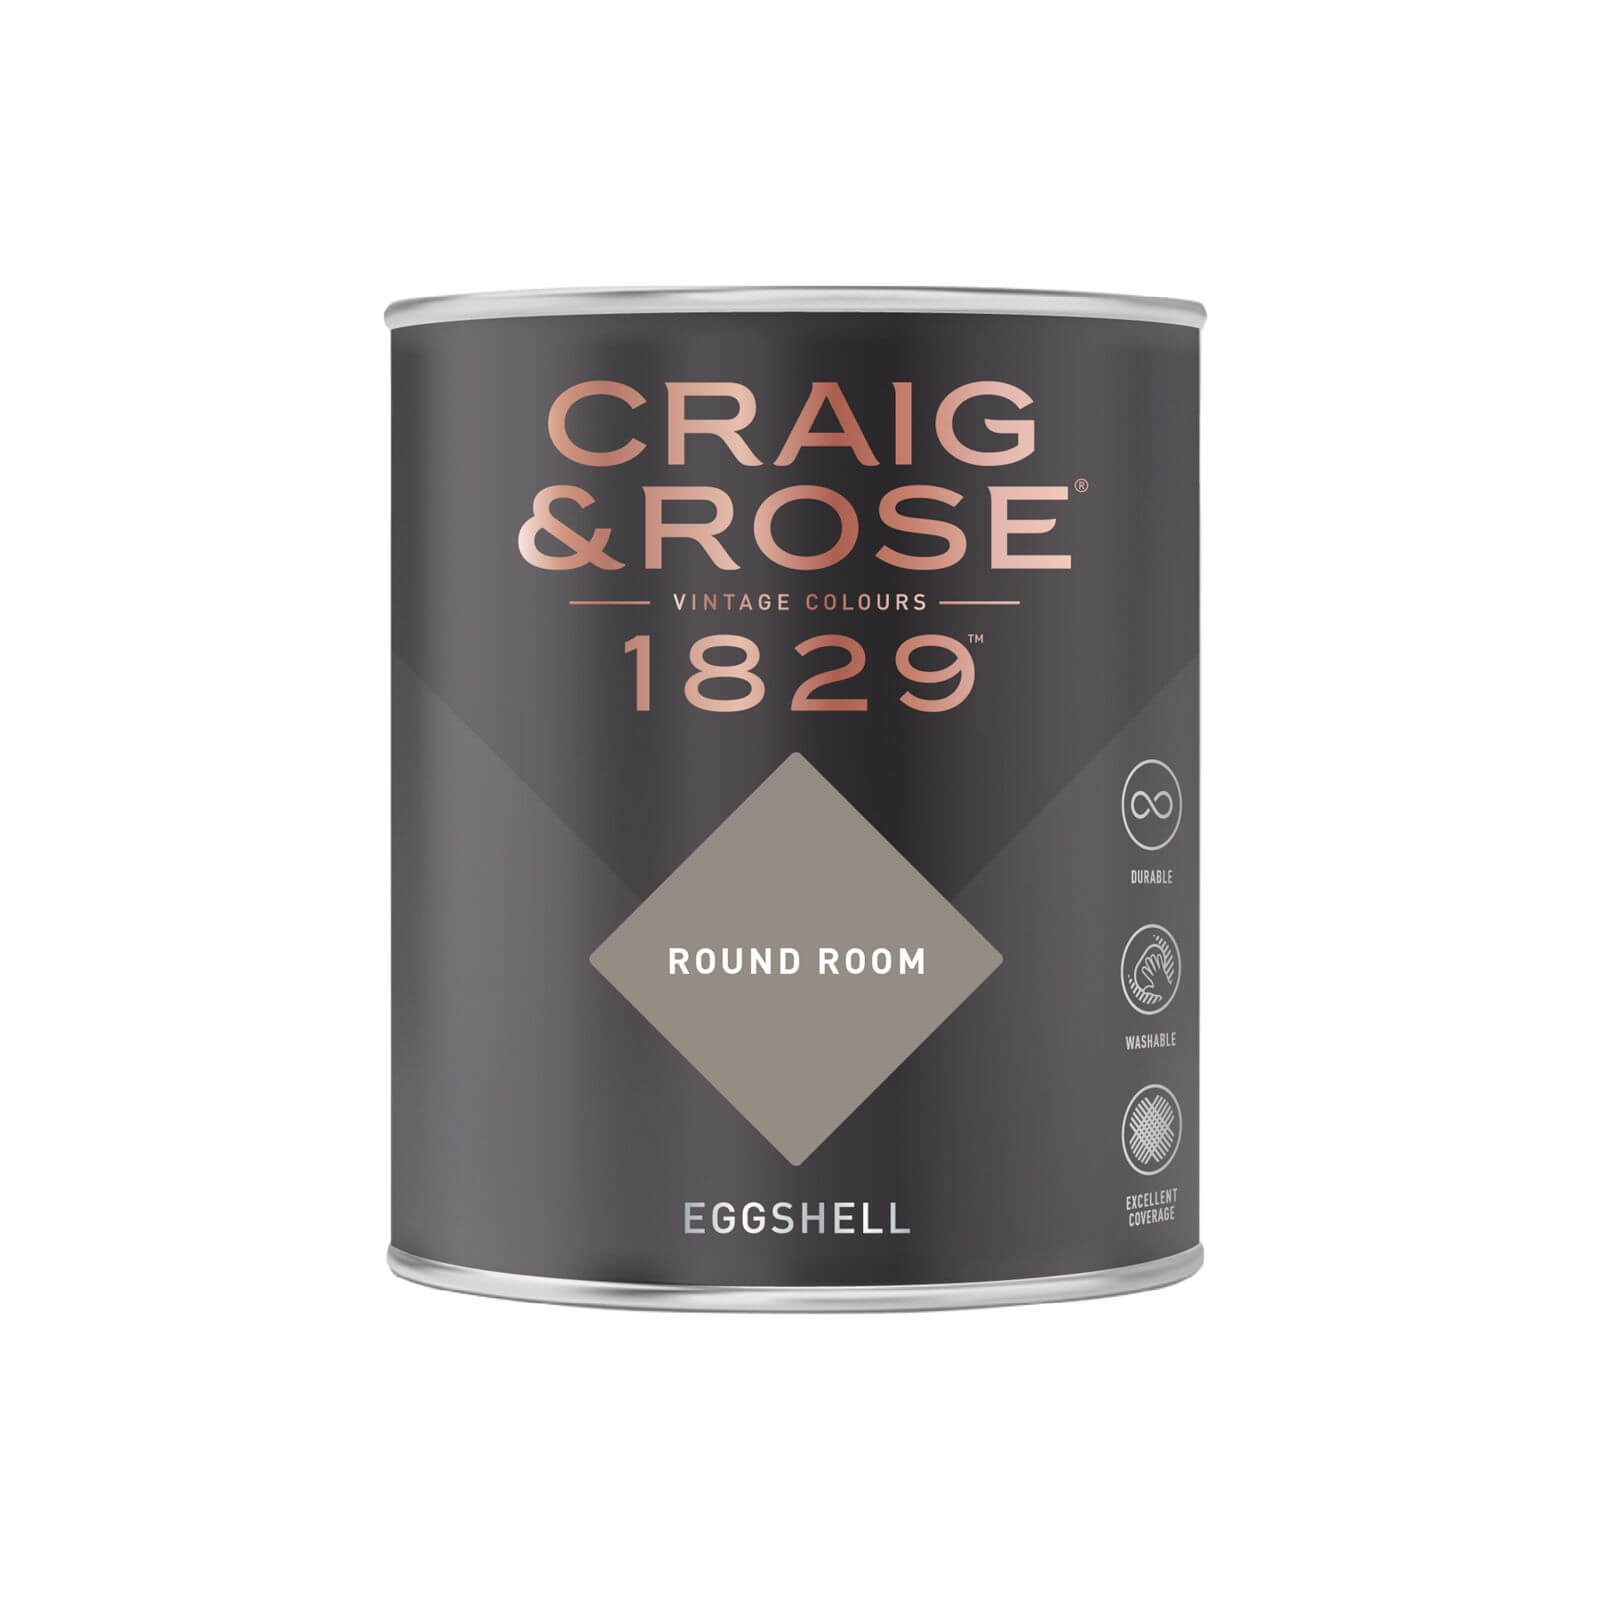 Craig & Rose 1829 Eggshell Paint Round Room - 750ml